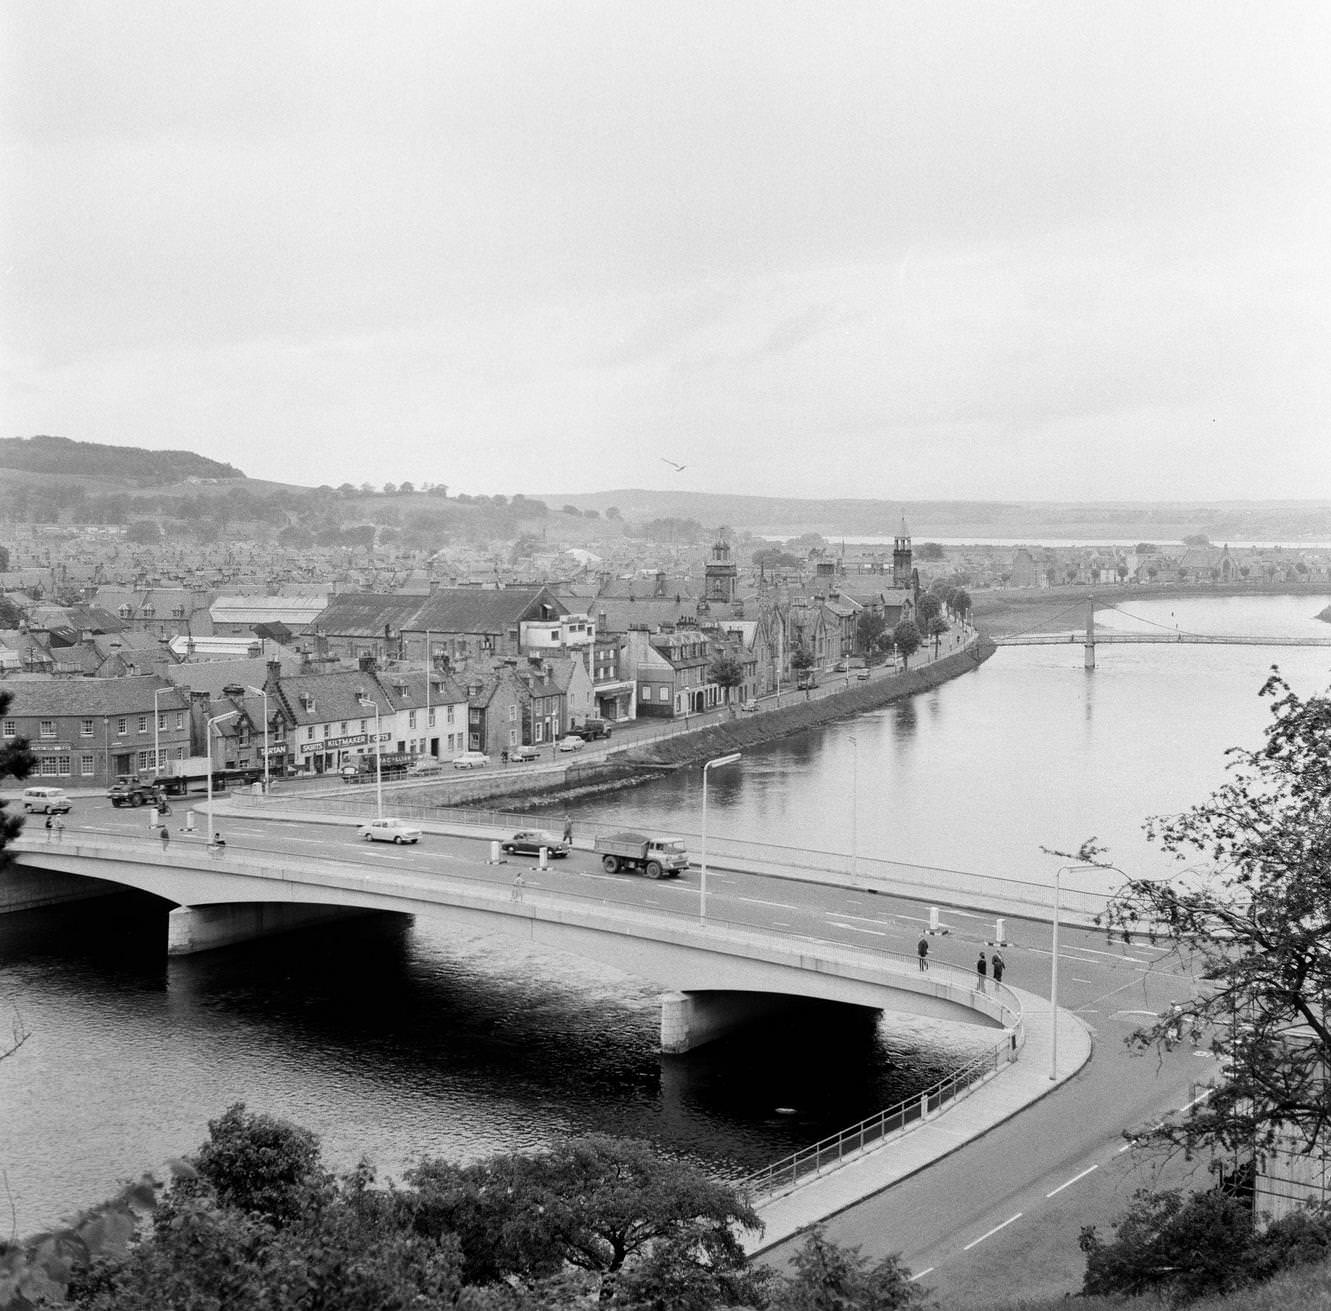 Ness Bridge over the River Ness in Inverness, Inverness-shire, 17th June 1964.